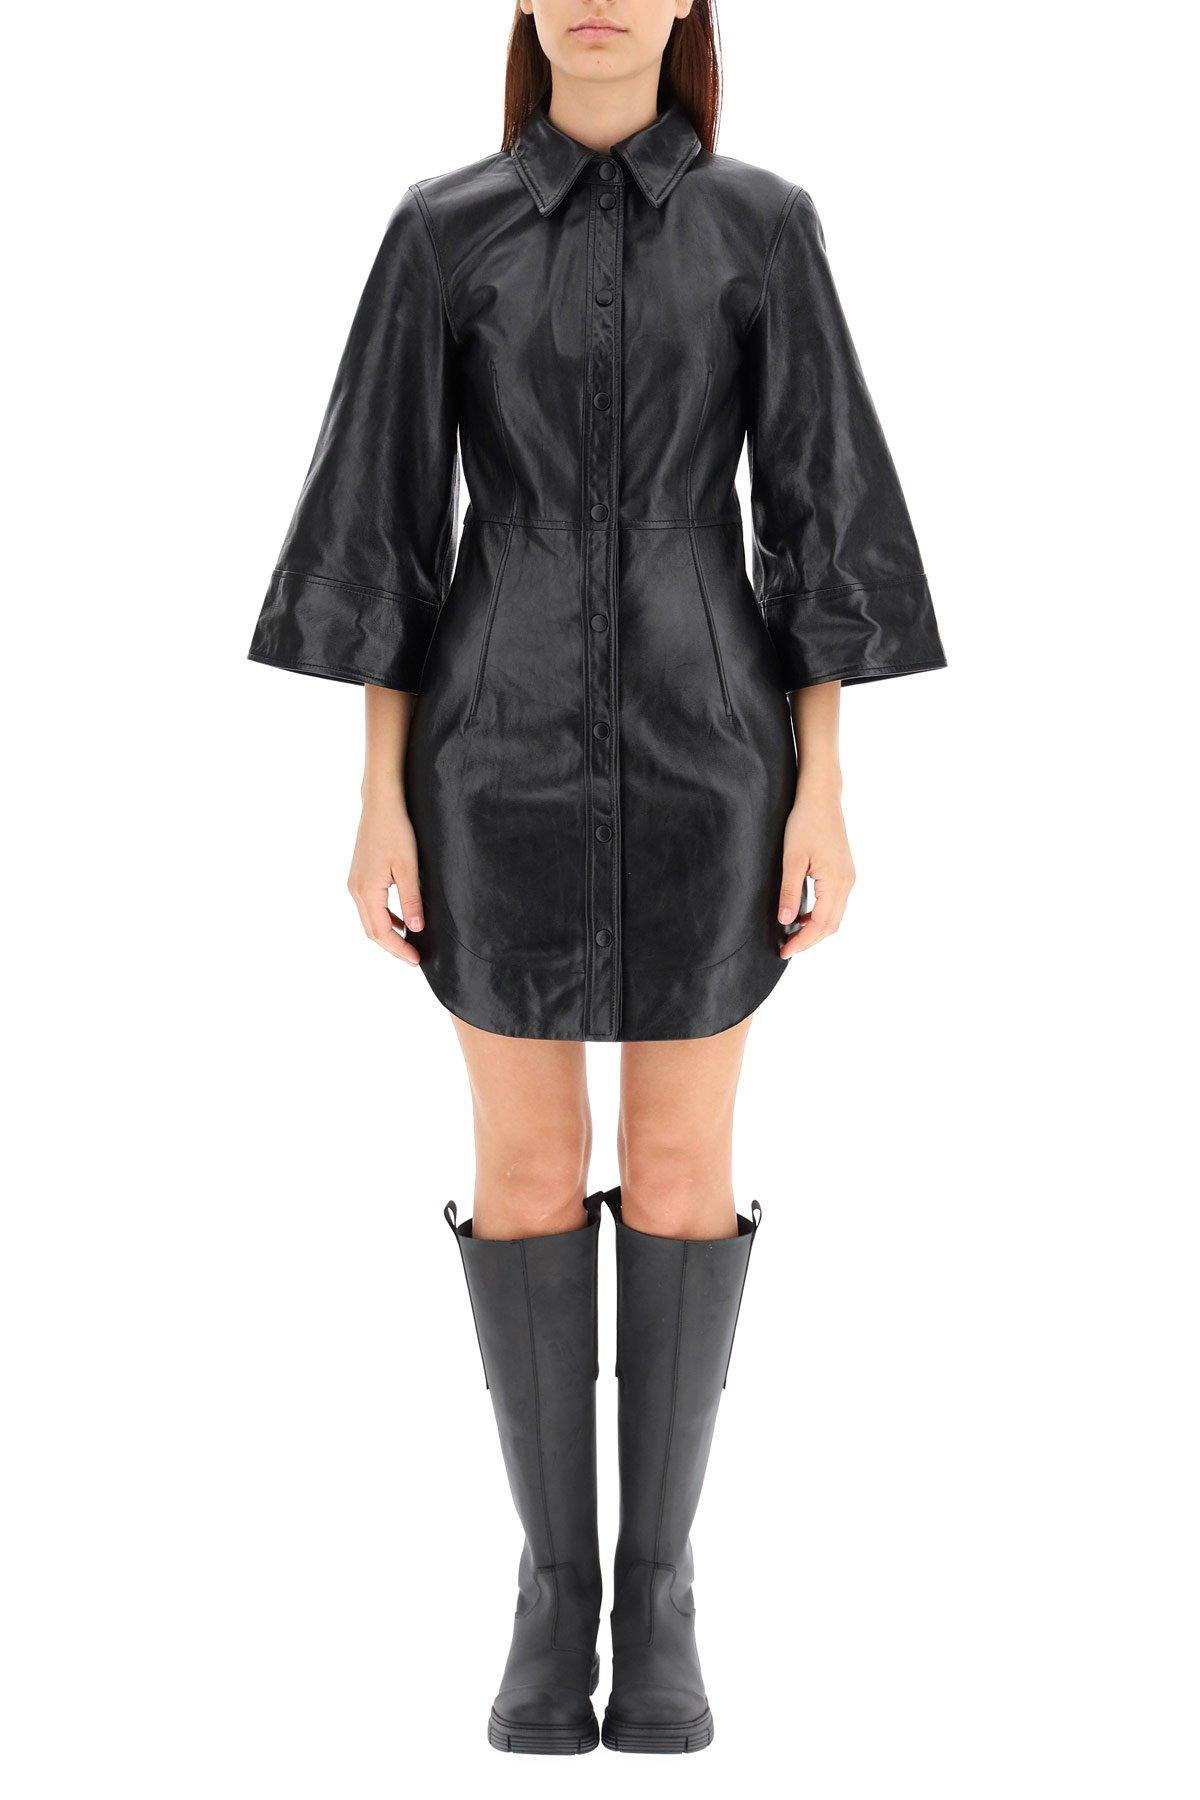 Ganni Leather Mini Dress in Black | Lyst